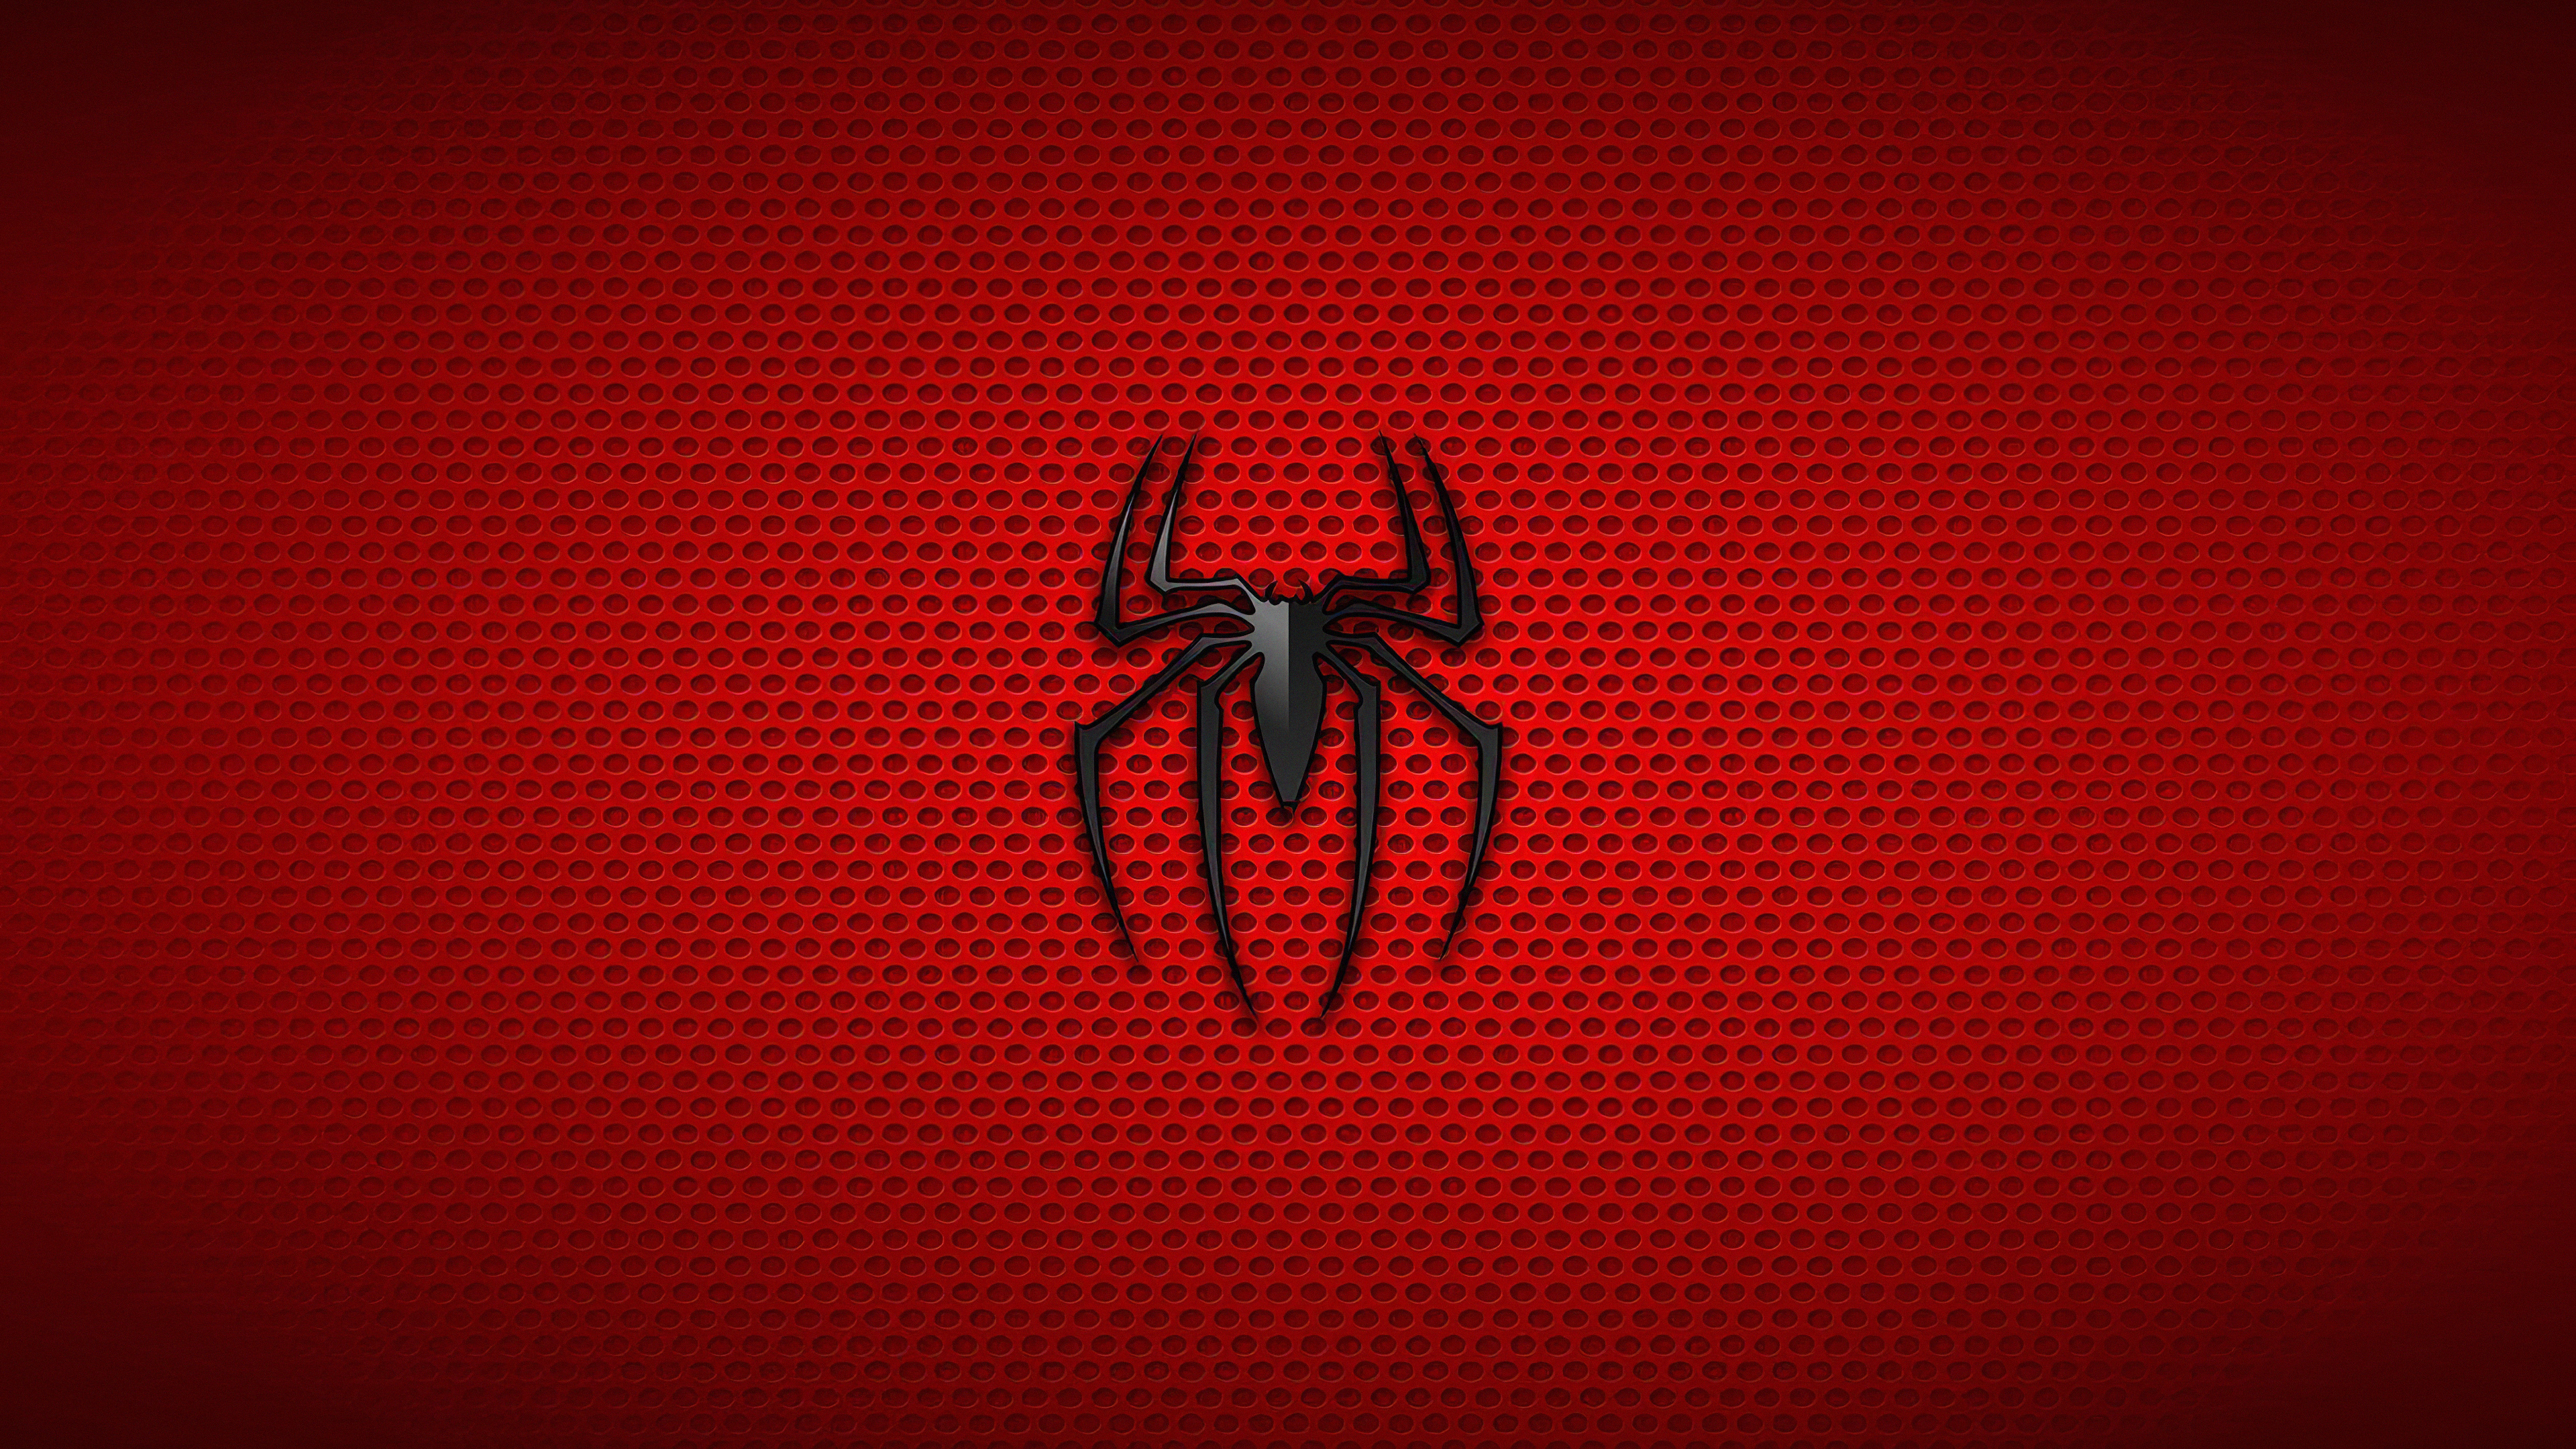 Download wallpaper 3840x2160 spider-man, black logo, minimal 4k wallpaper, uhd  wallpaper, 16:9 widescreen 3840x2160 hd background, 24285